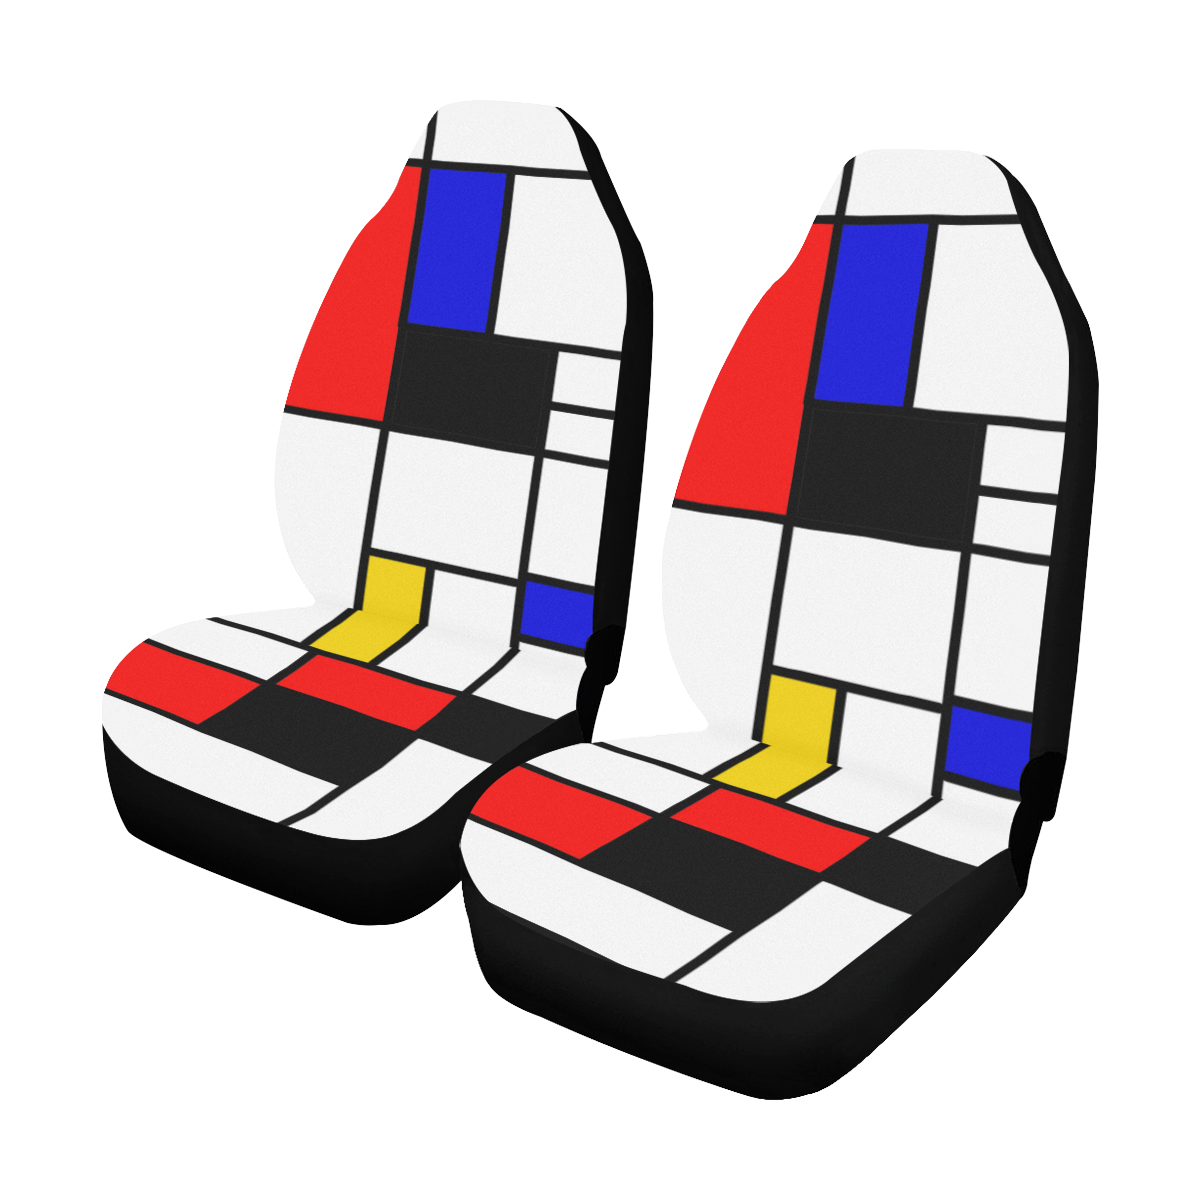 Bauhouse Composition Mondrian Style Car Seat Covers (Set of 2)